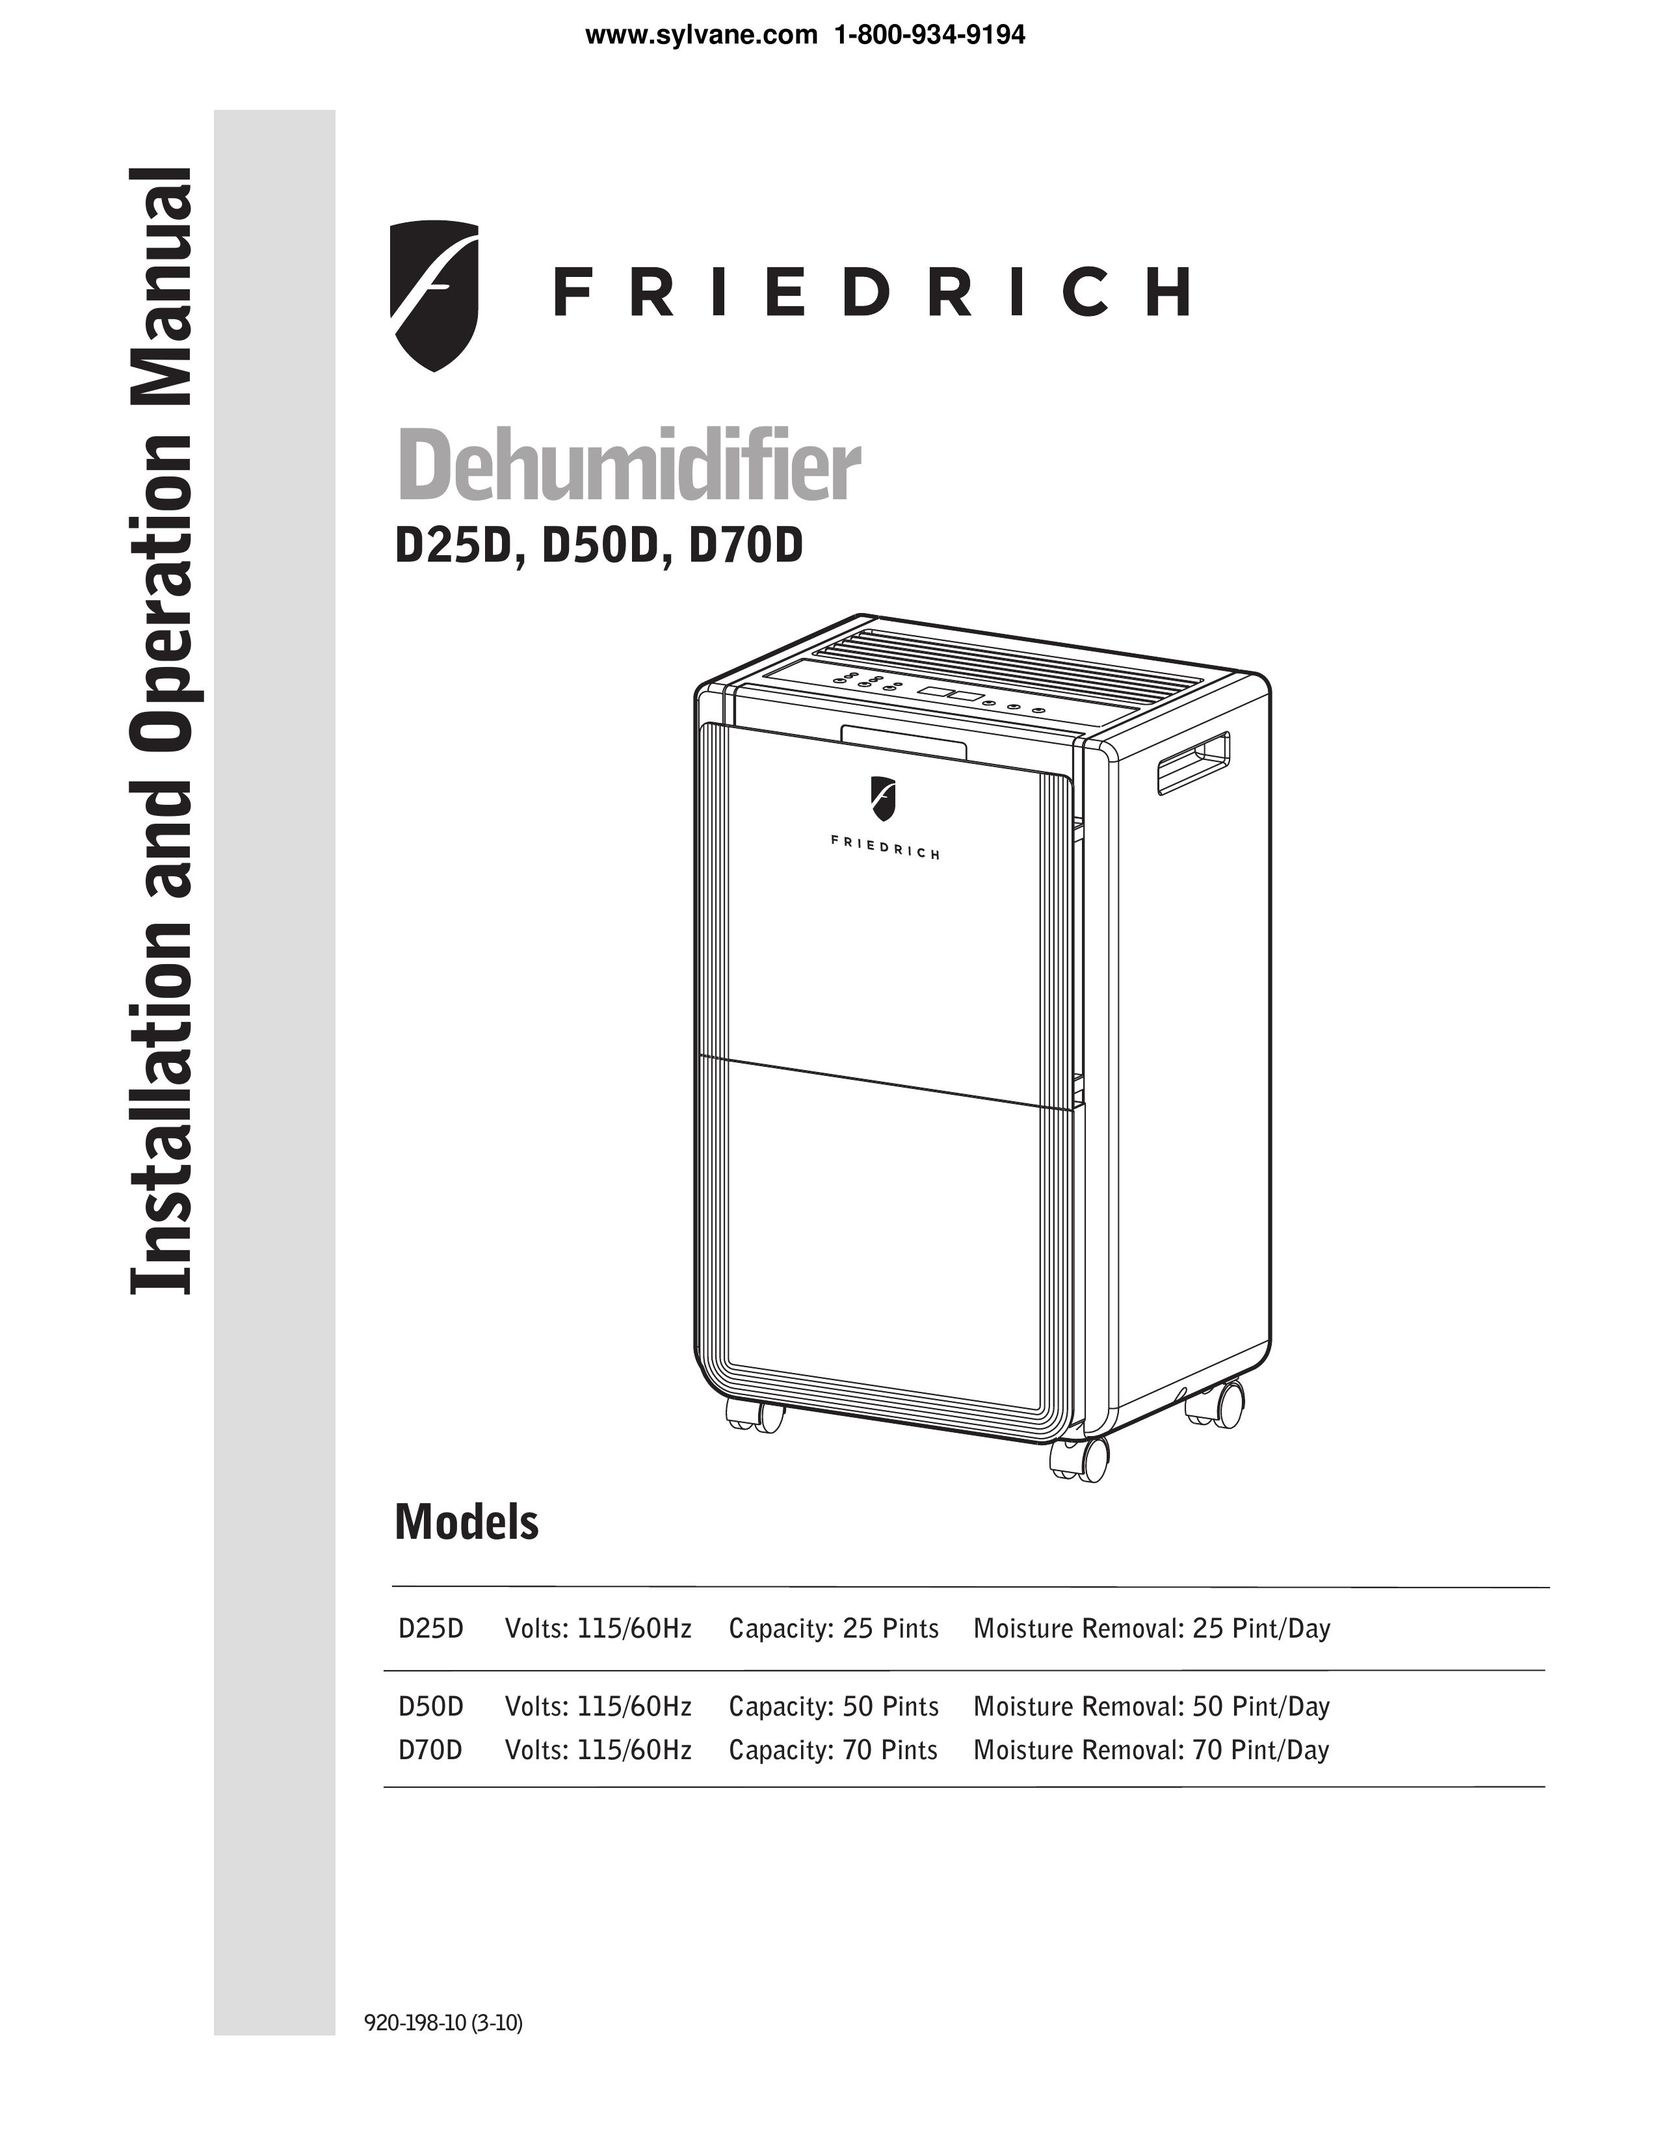 Frigidaire D50D Dehumidifier User Manual